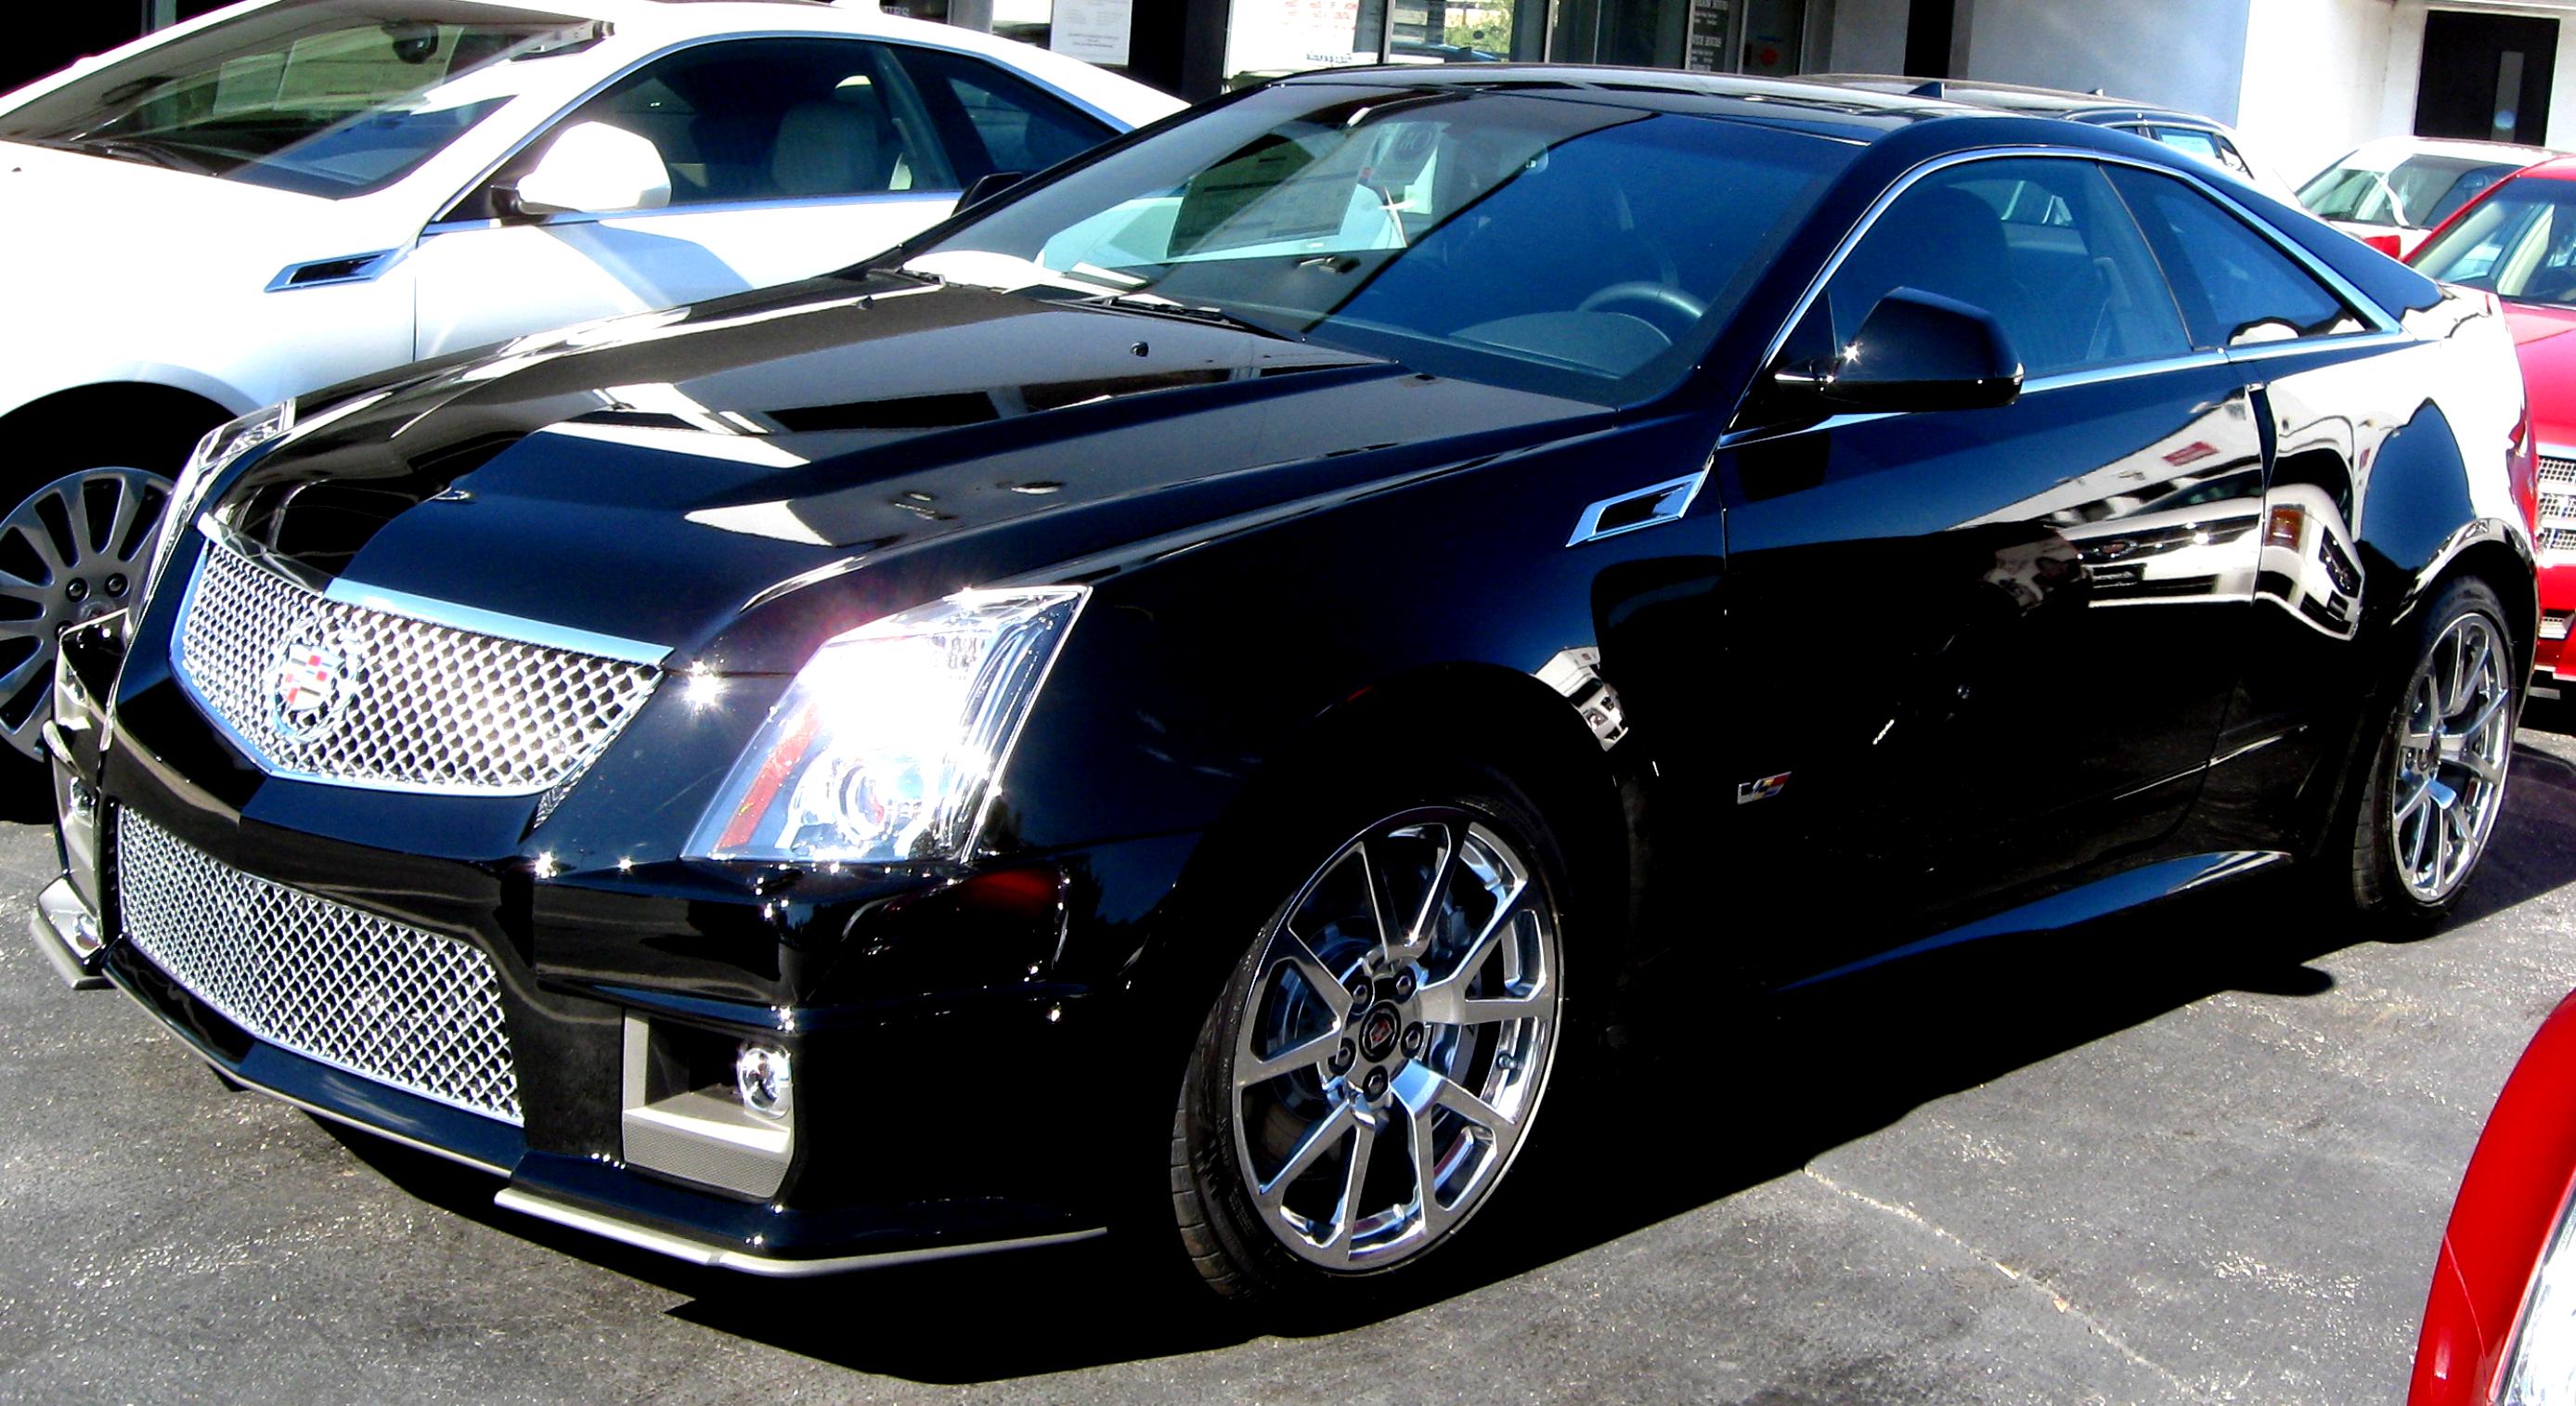 Cadillac CTS-V Coupe 2012 #52